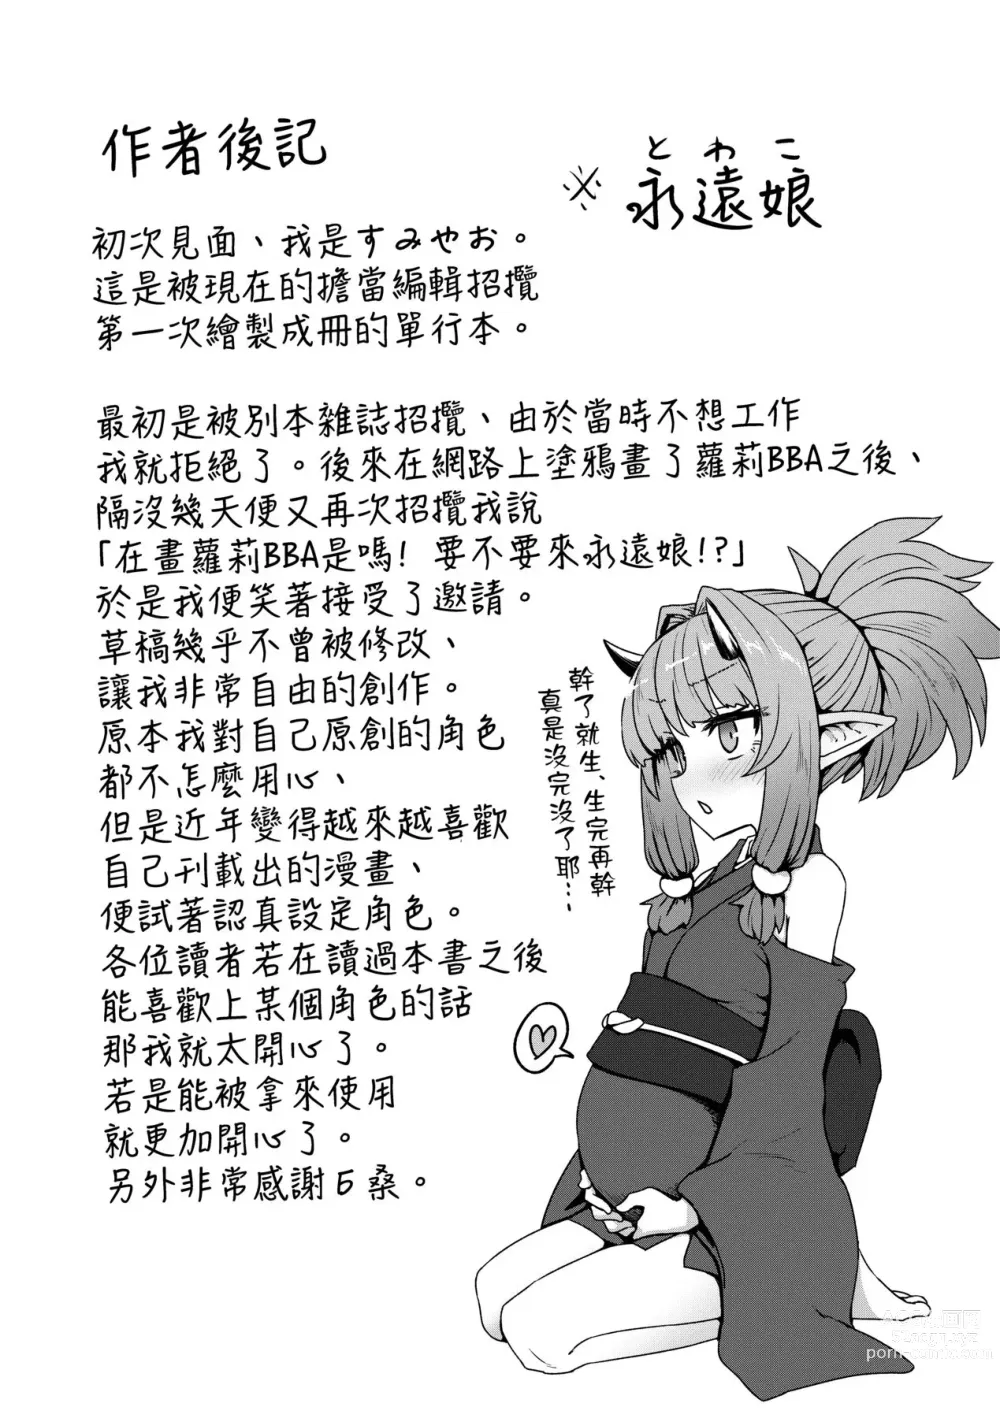 Page 195 of manga 即墮落蘿莉永遠娘 (decensored)